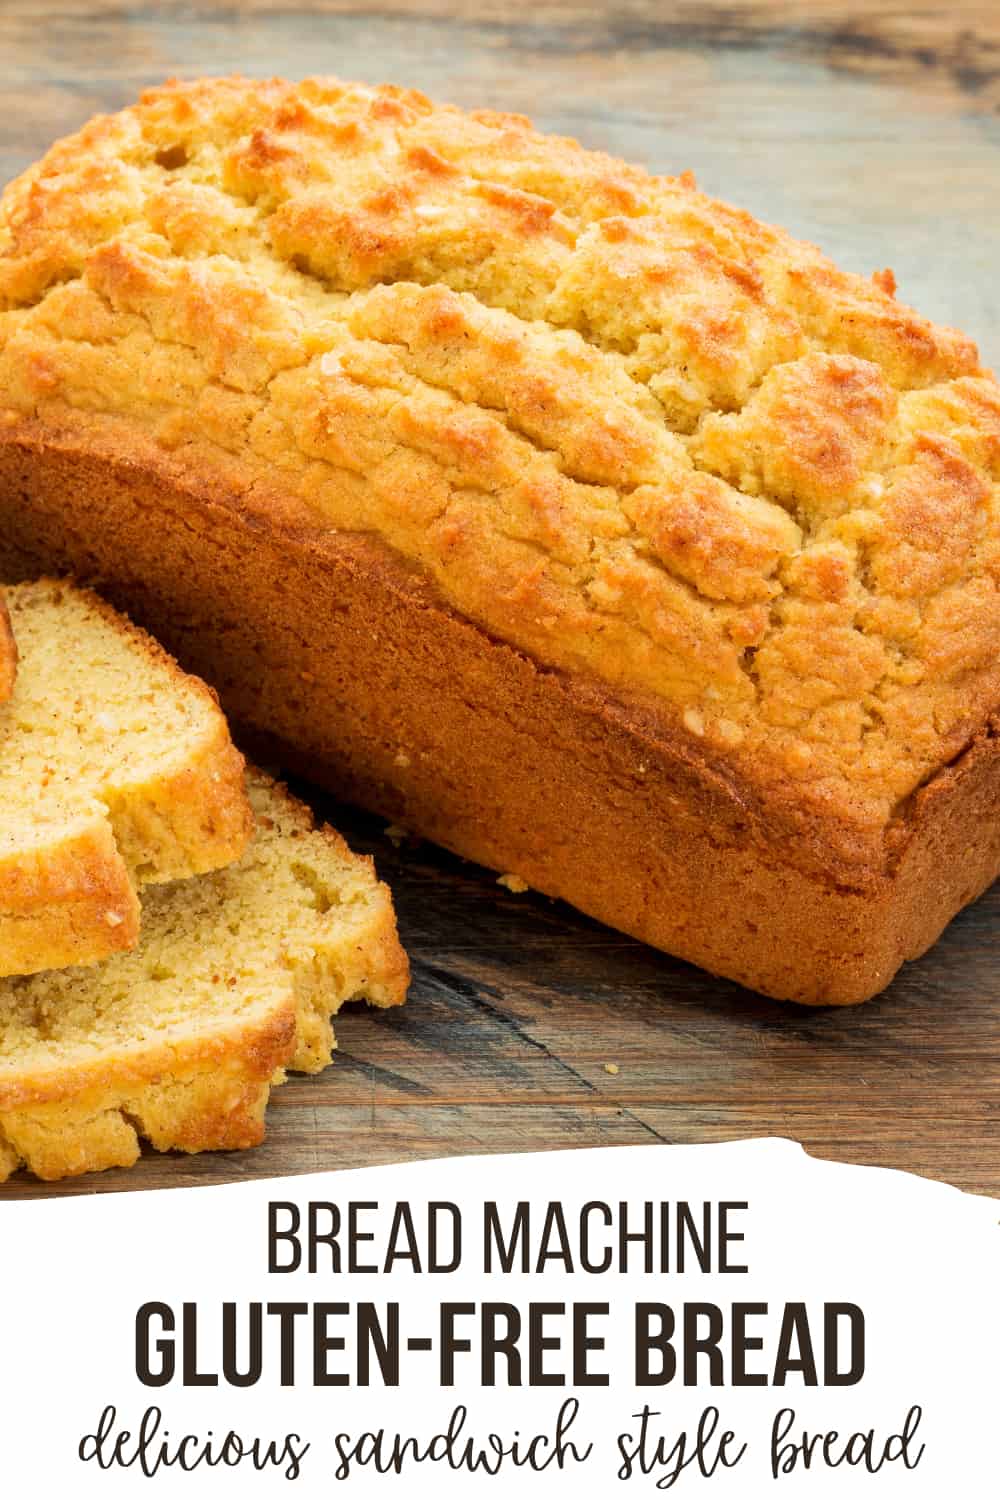 Gluten Free Bread Machine Recipe